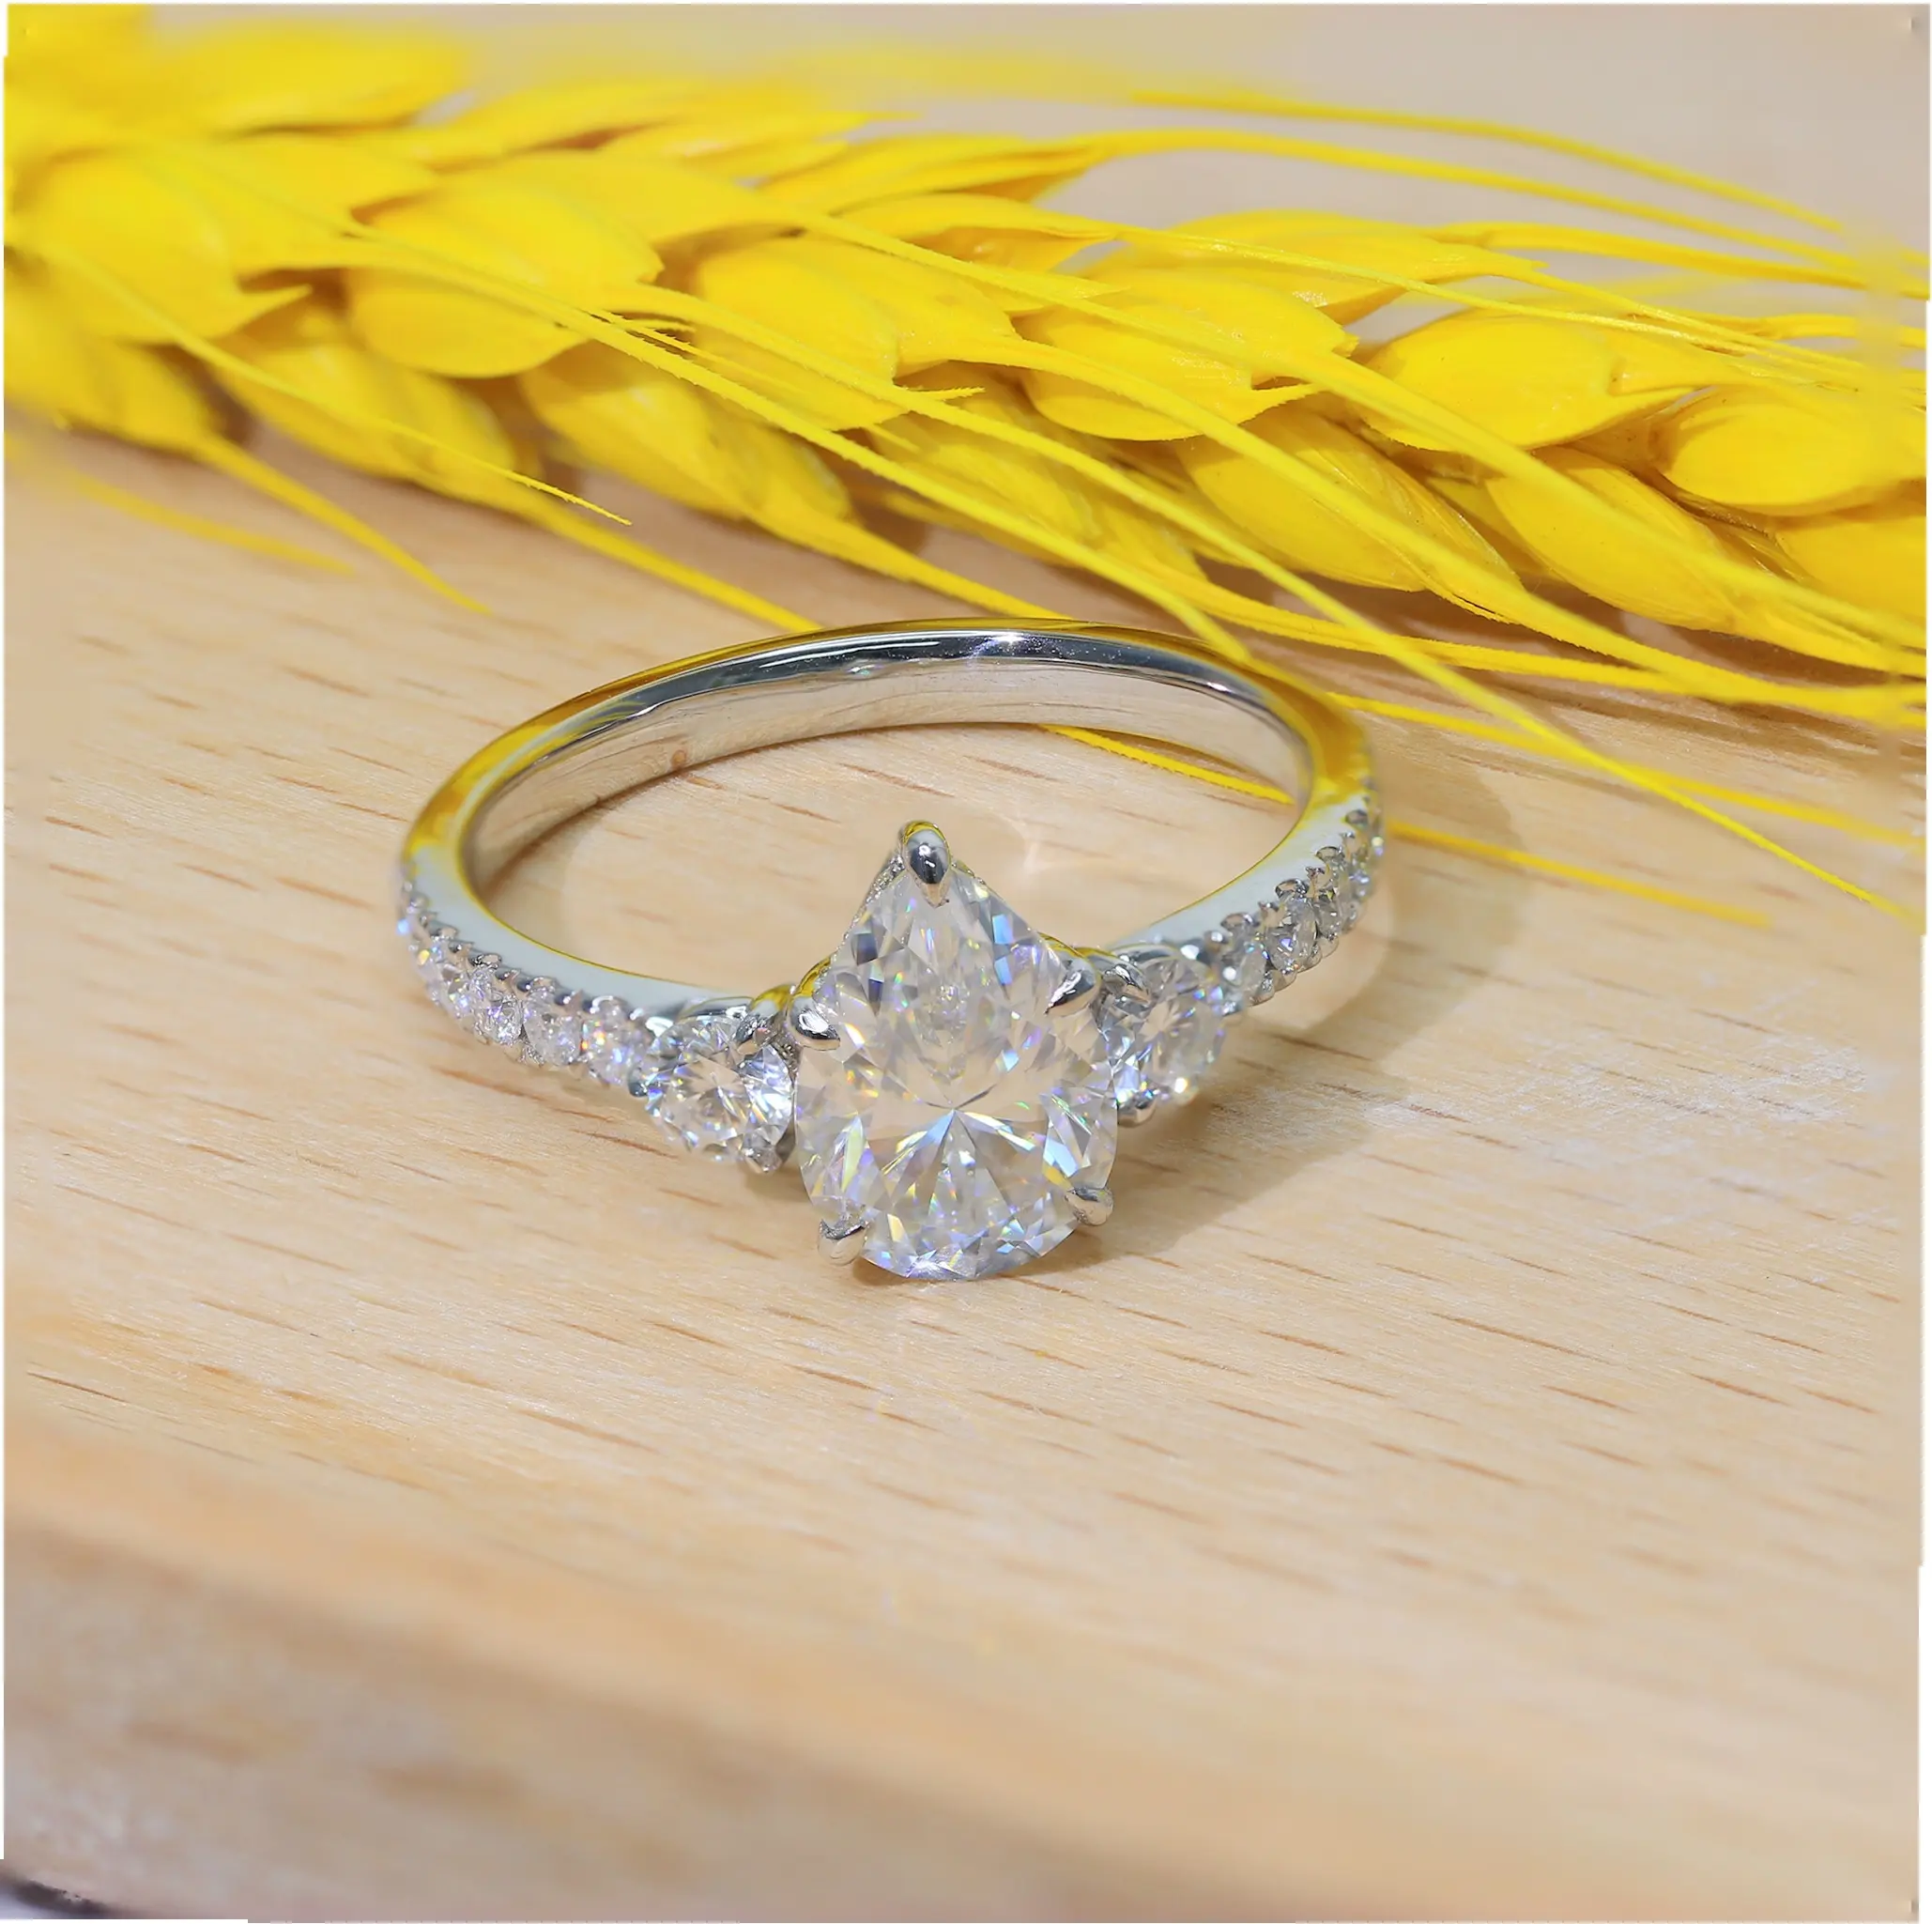 White D Color 7x10mm 2ct Pear Moissanite Ring 10k Solid White Gold Fancy Moissanite Diamond Engagement Wedding Ring